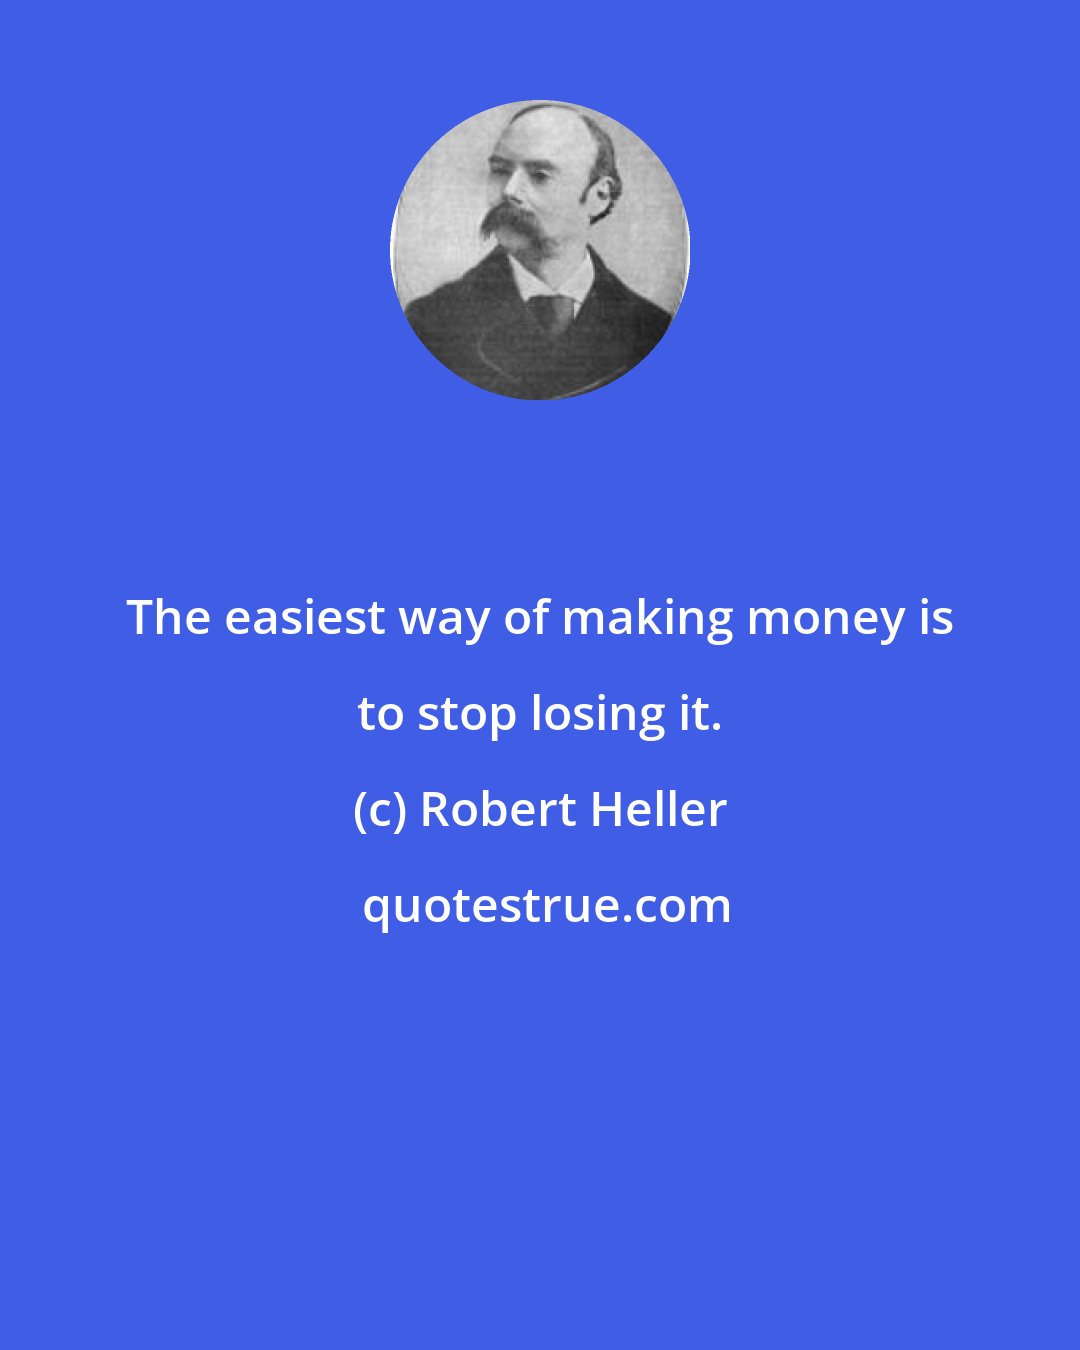 Robert Heller: The easiest way of making money is to stop losing it.